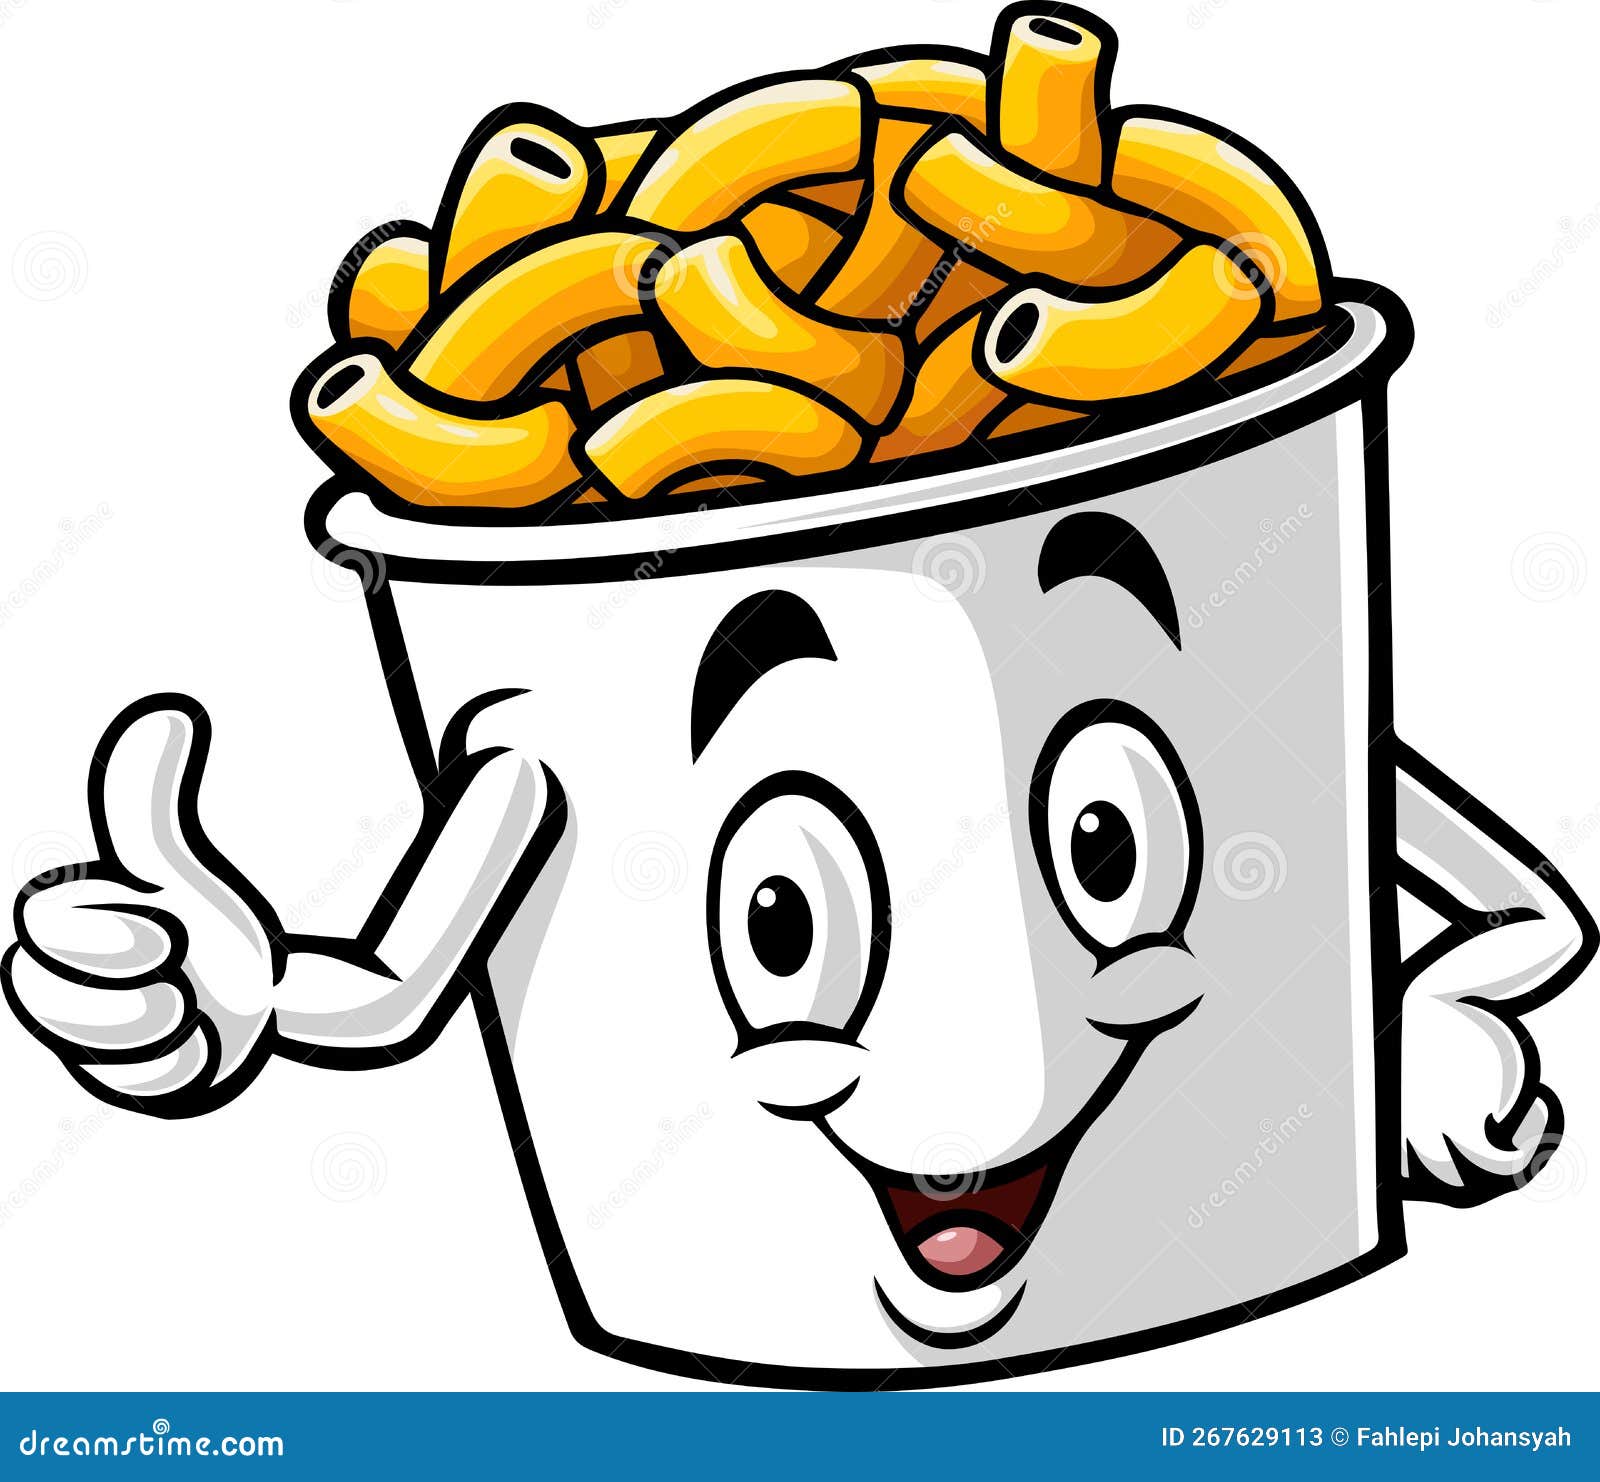 cup of macaroni mascot character giving thumb up